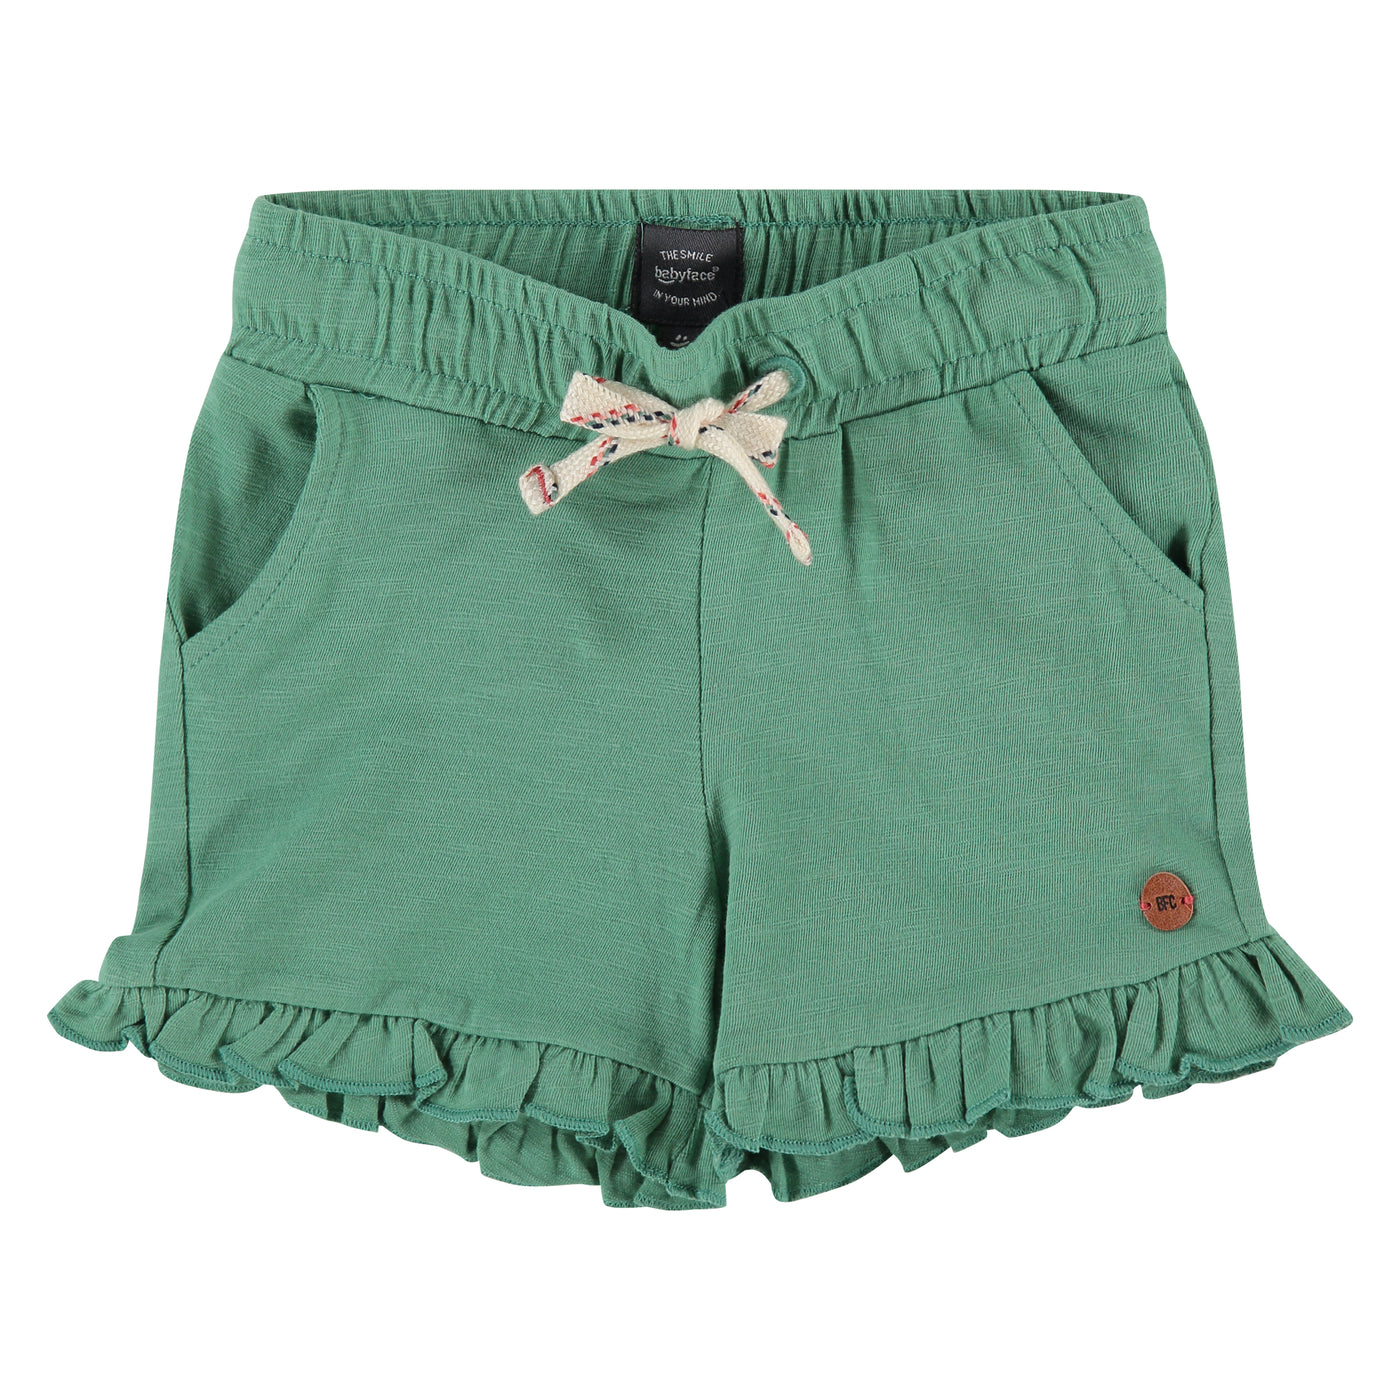 Ruffle Shorts in Emerald